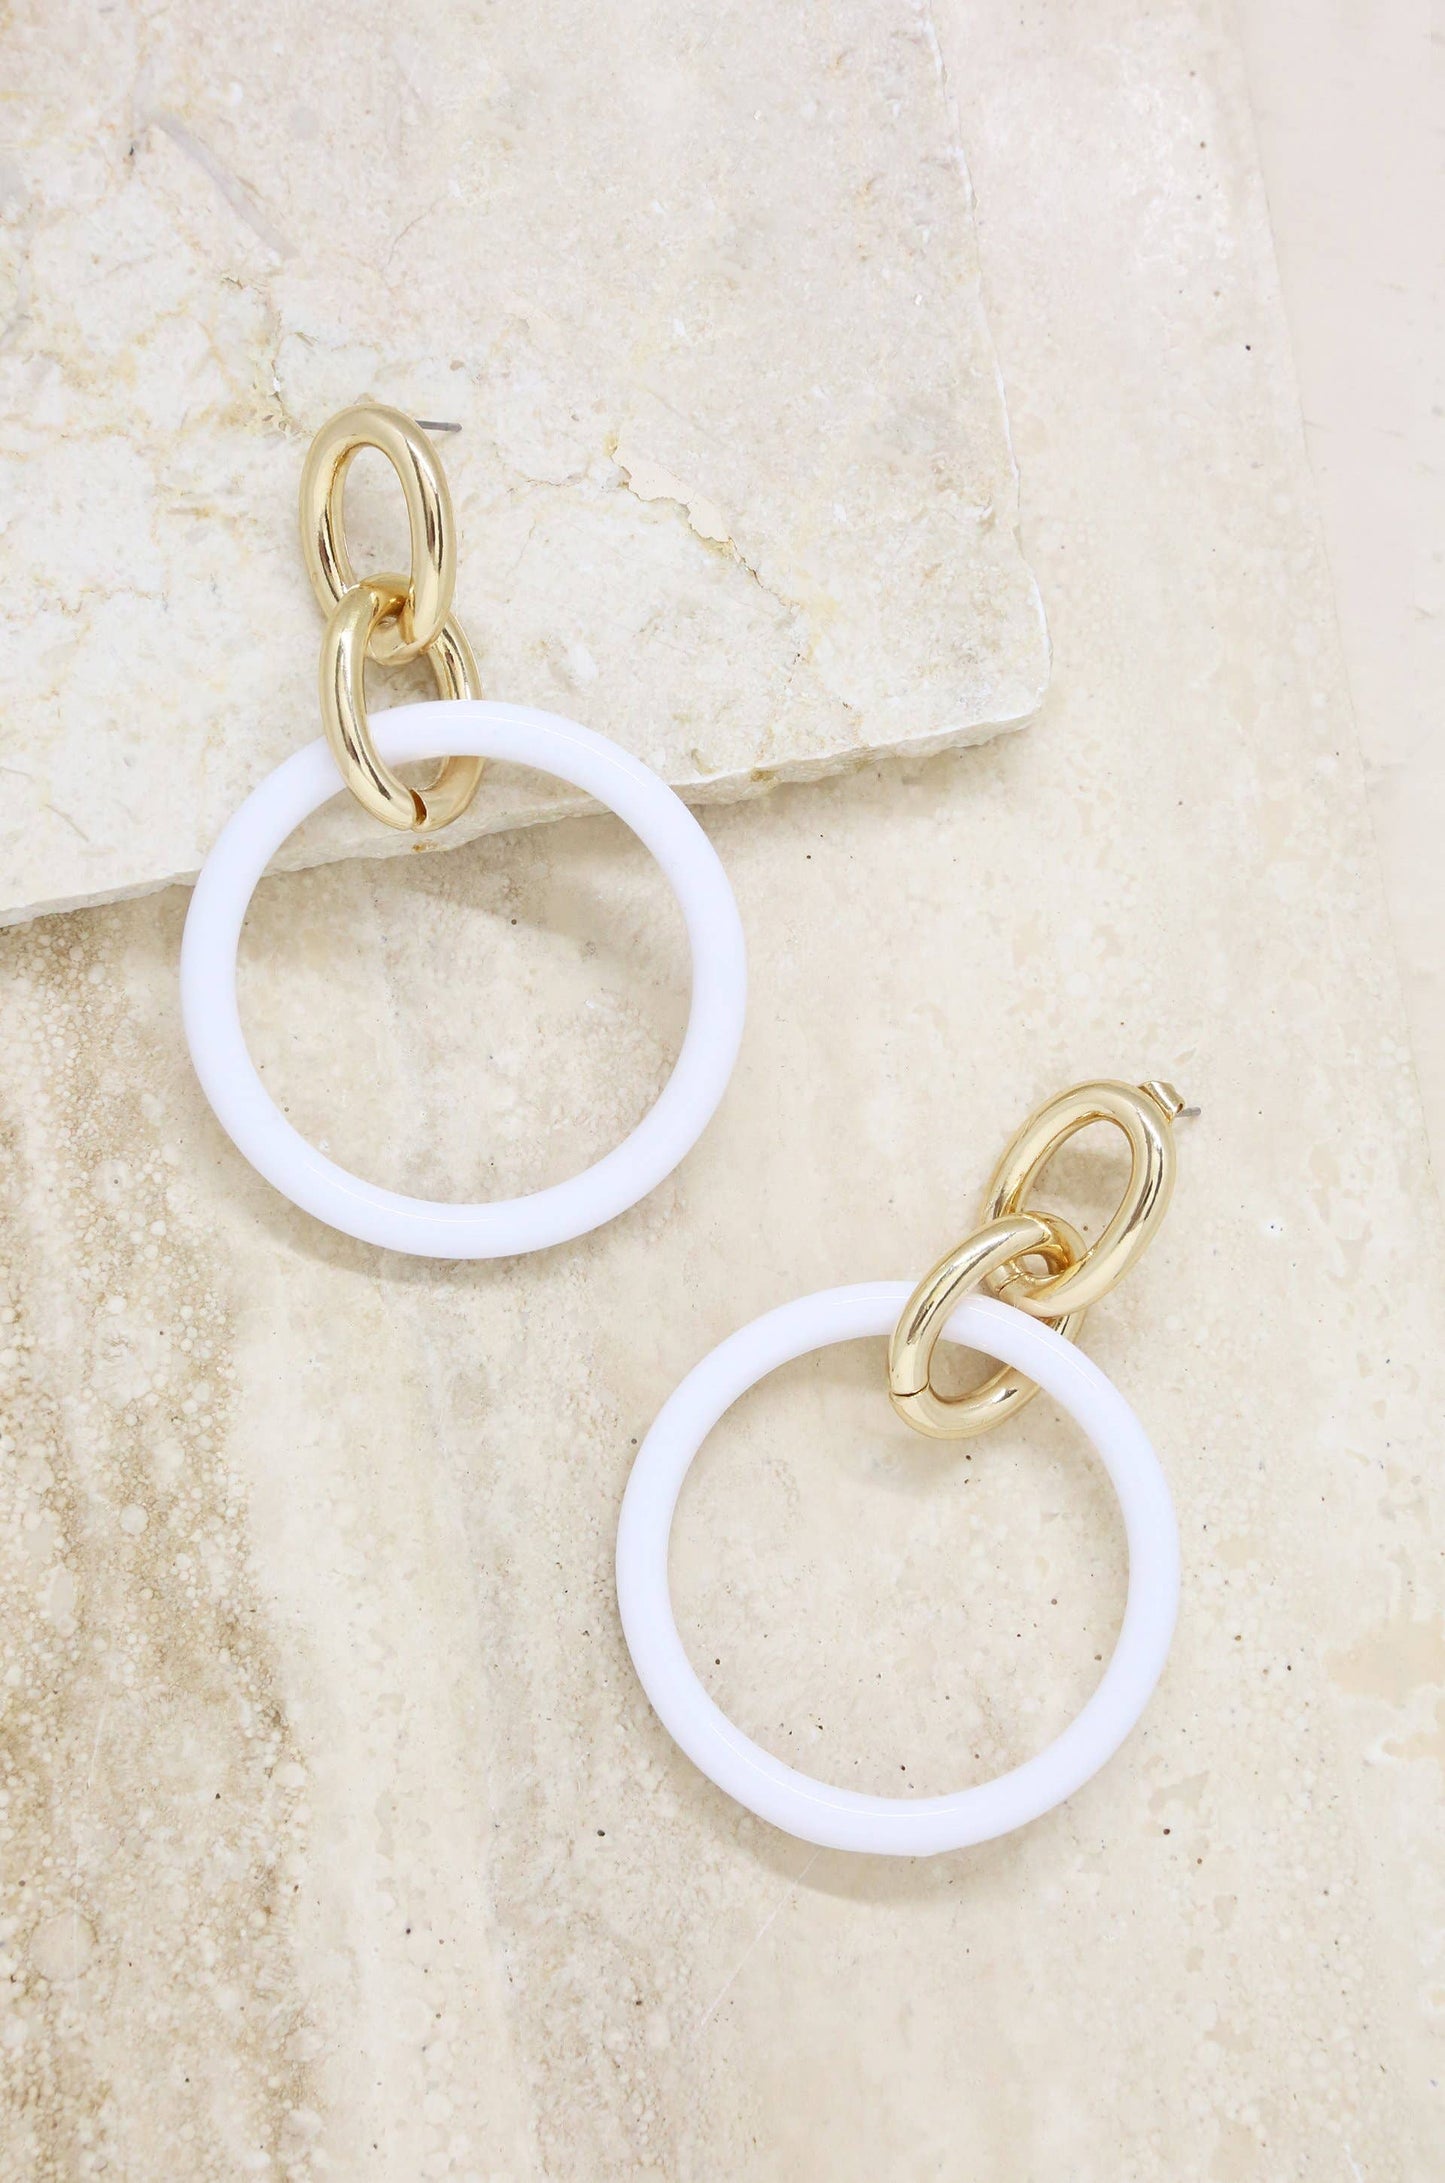 Ettika - Be True Earrings in White and Gold